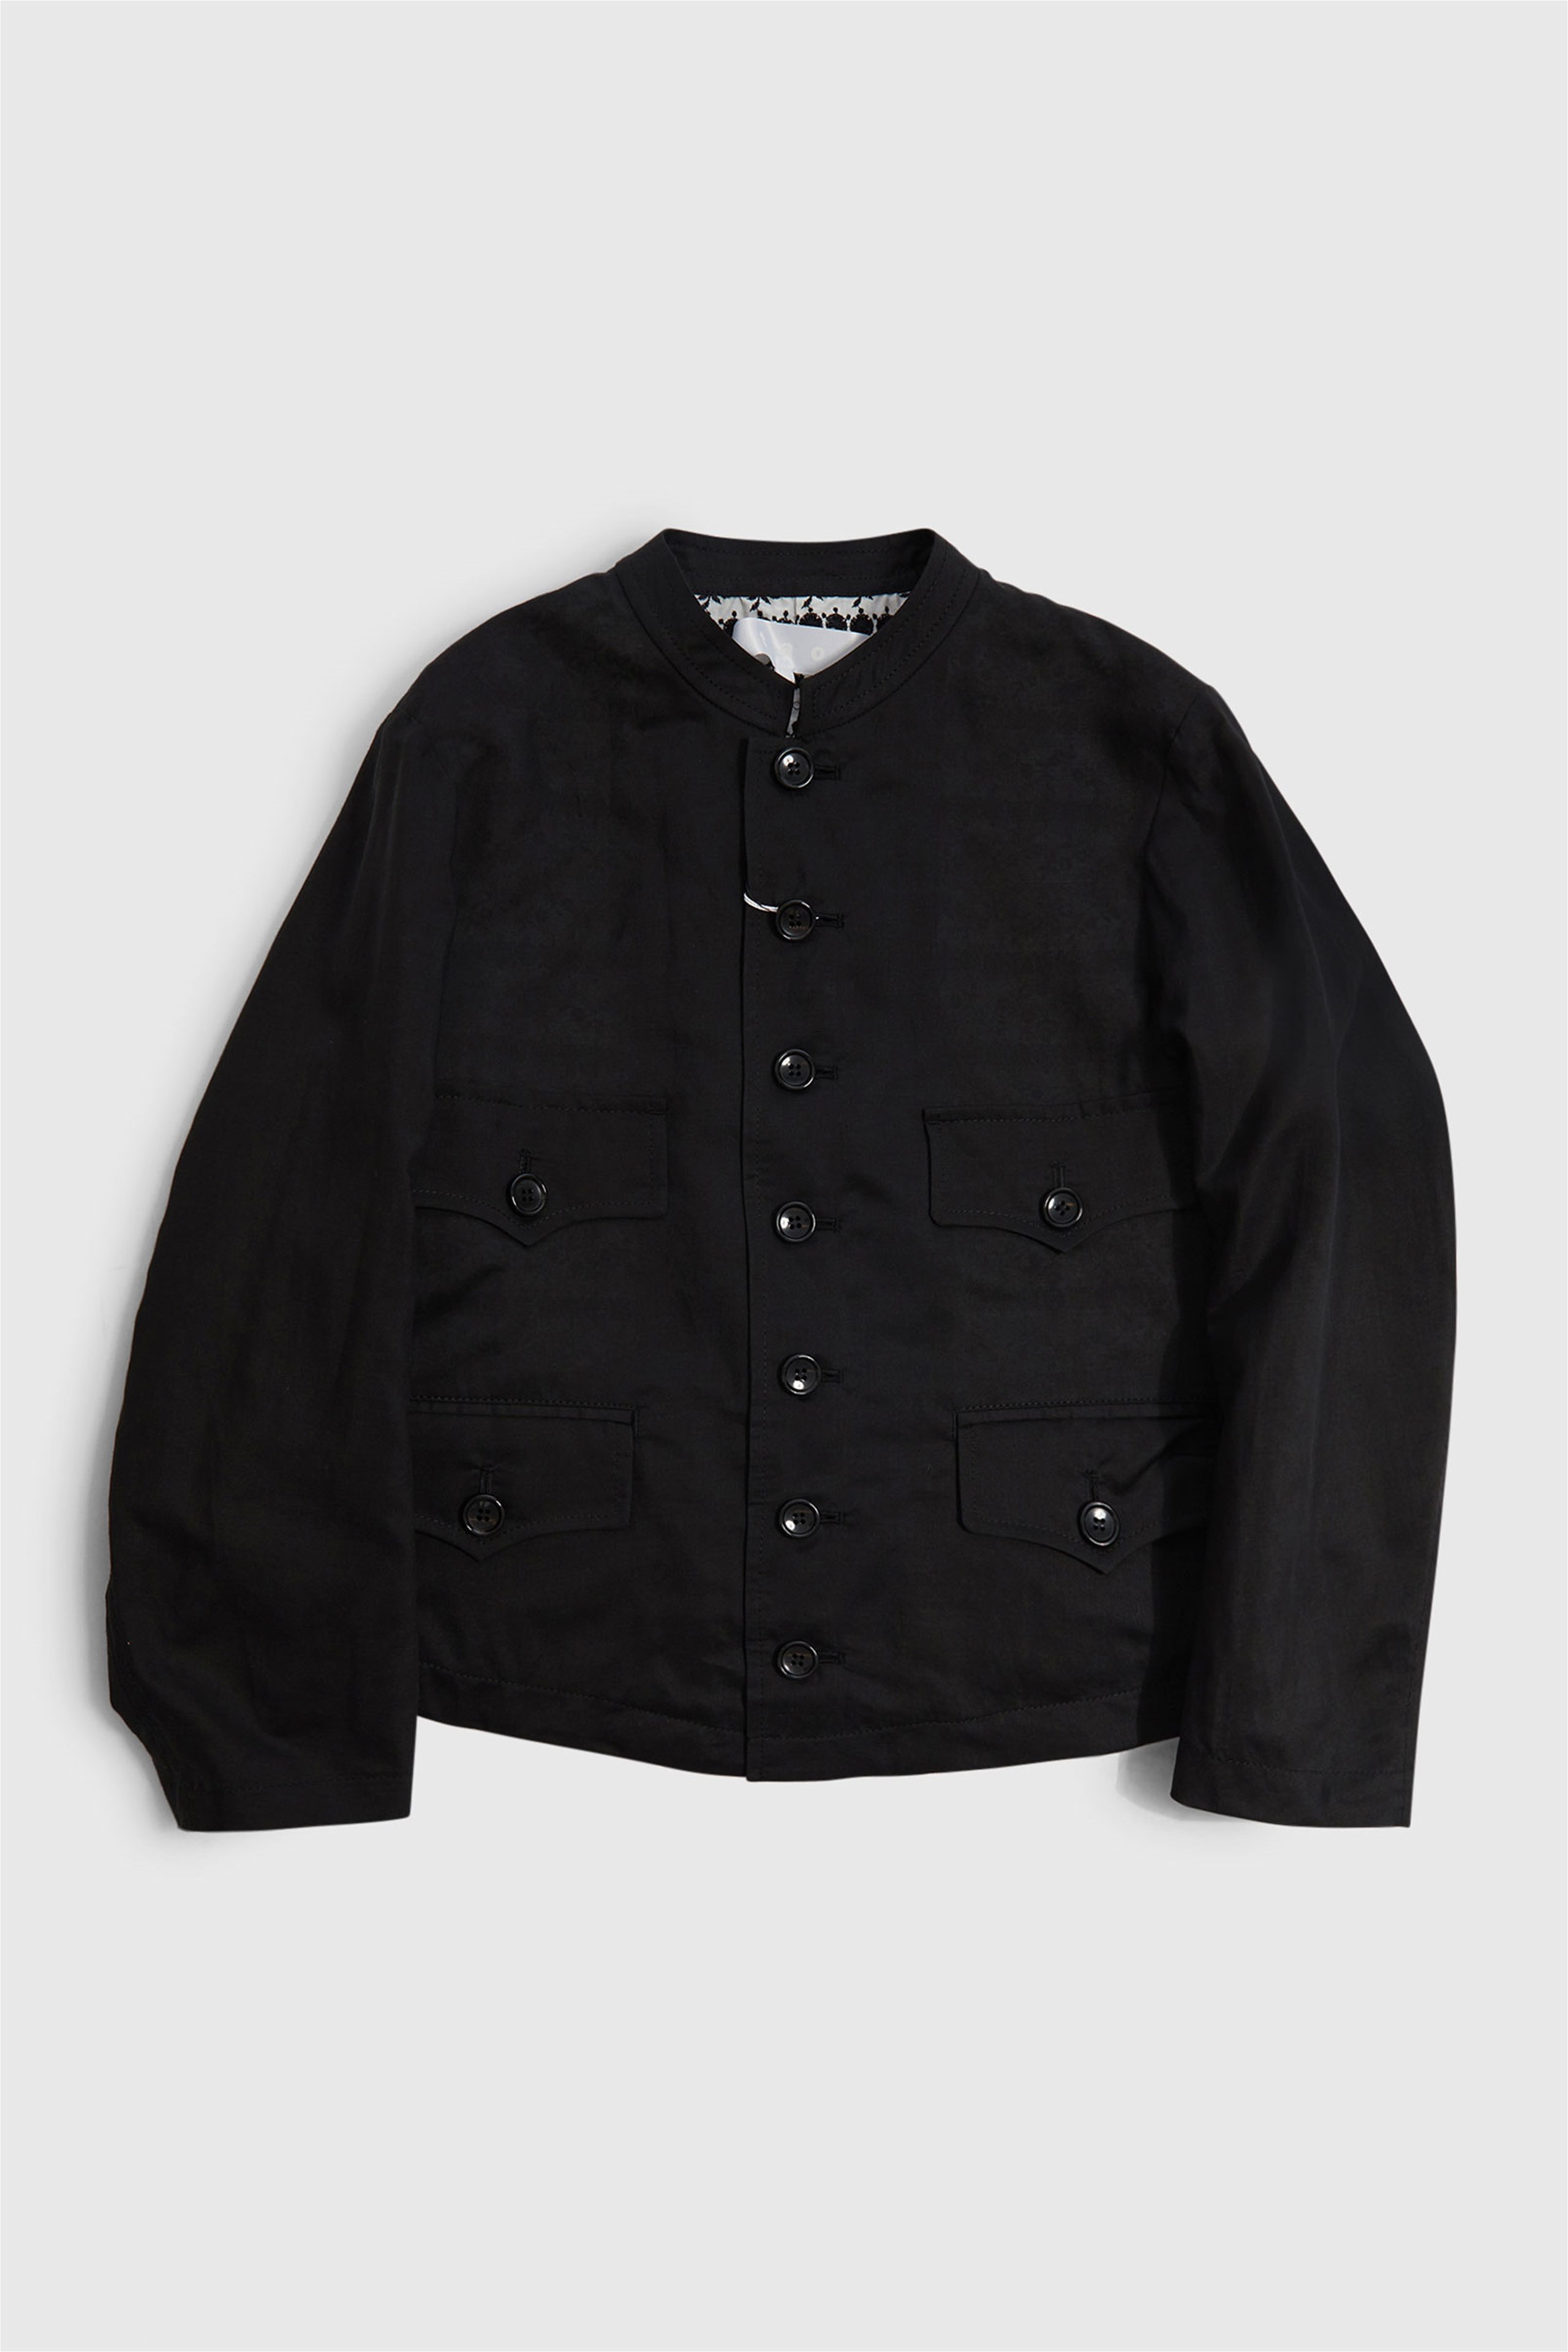 Comme des Garçons Tao Ladies' Jacket Black | WoodWood.com